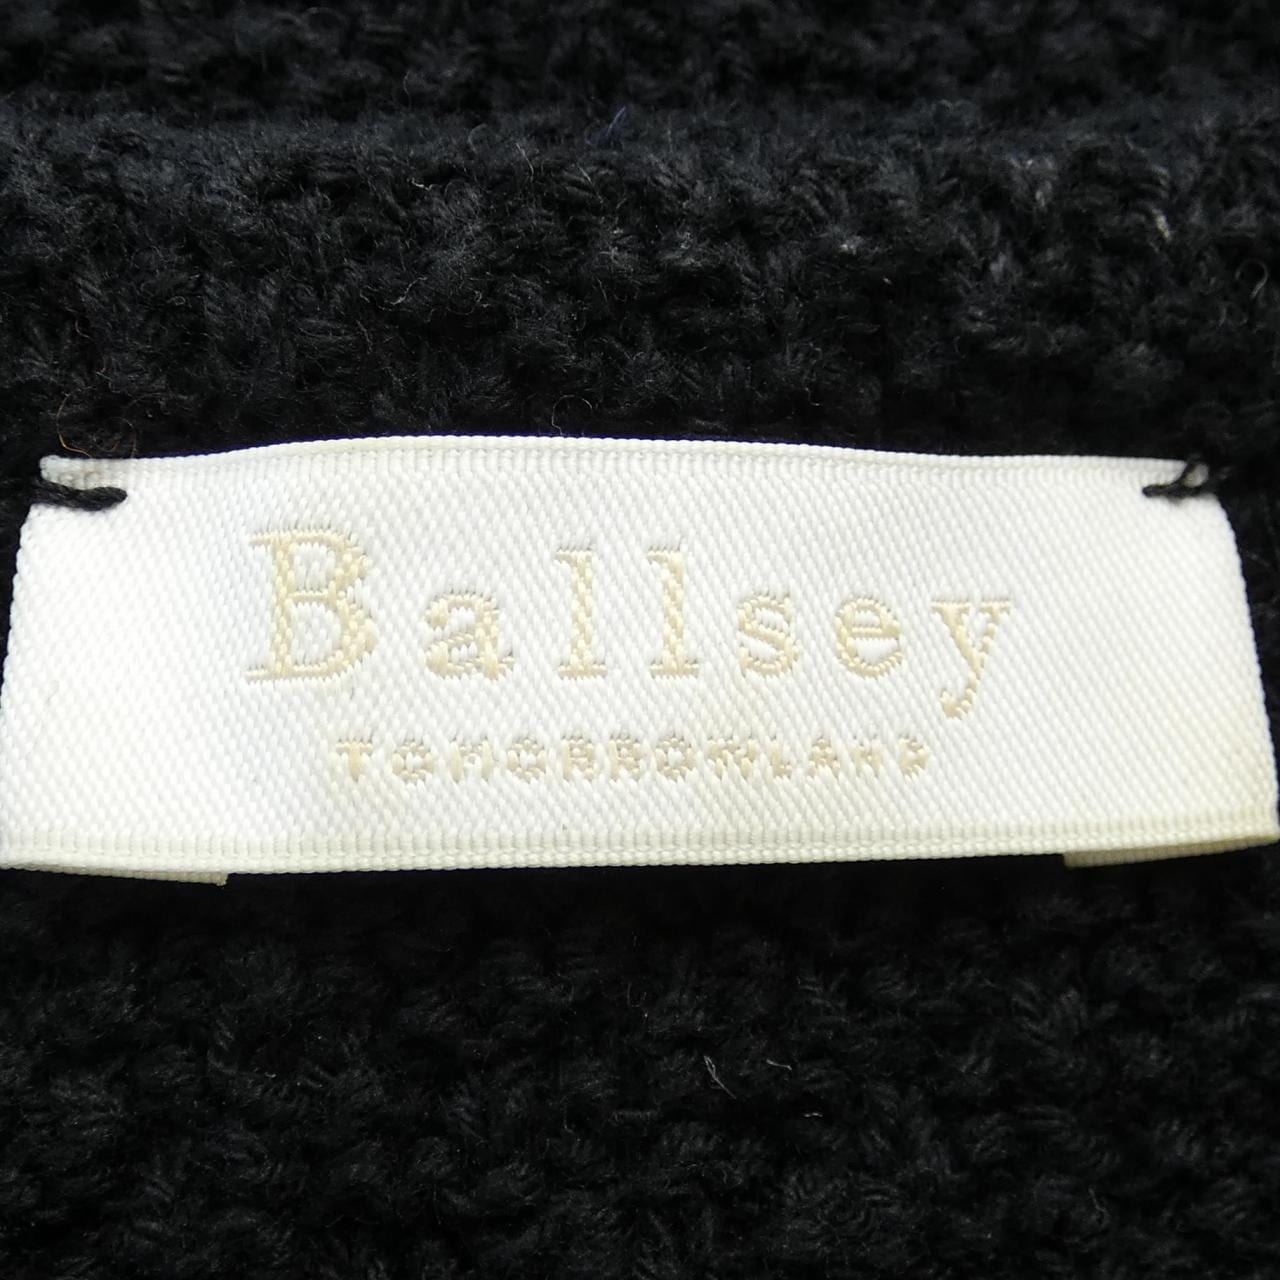 BALLSEY tops